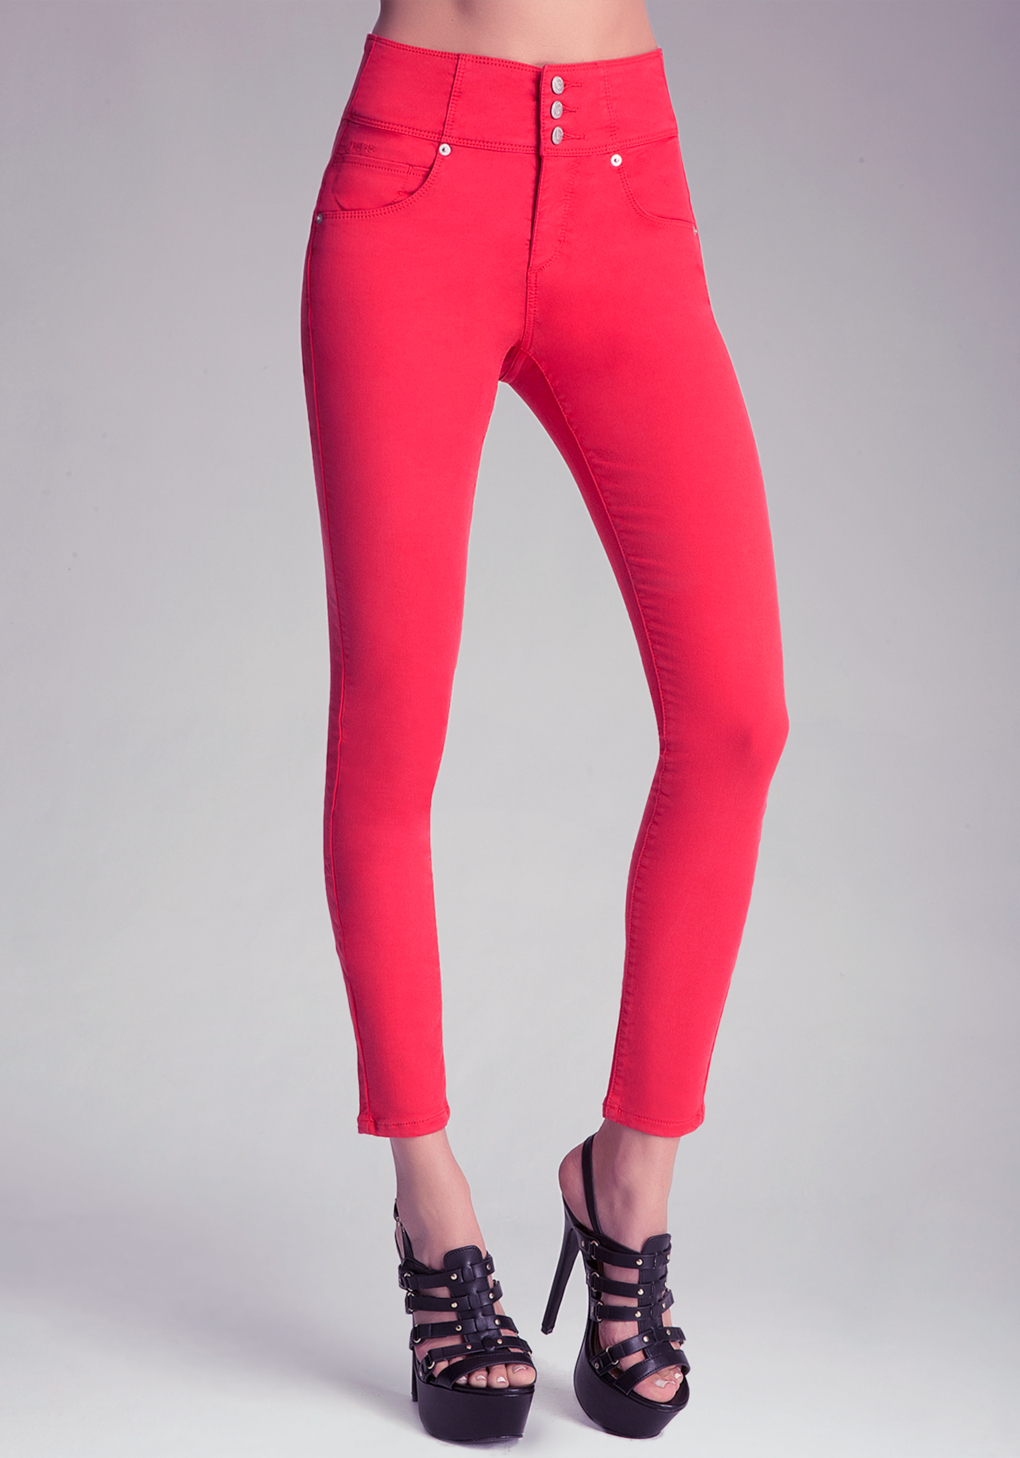 Bebe High Waist Skinny Jeans in Red | Lyst